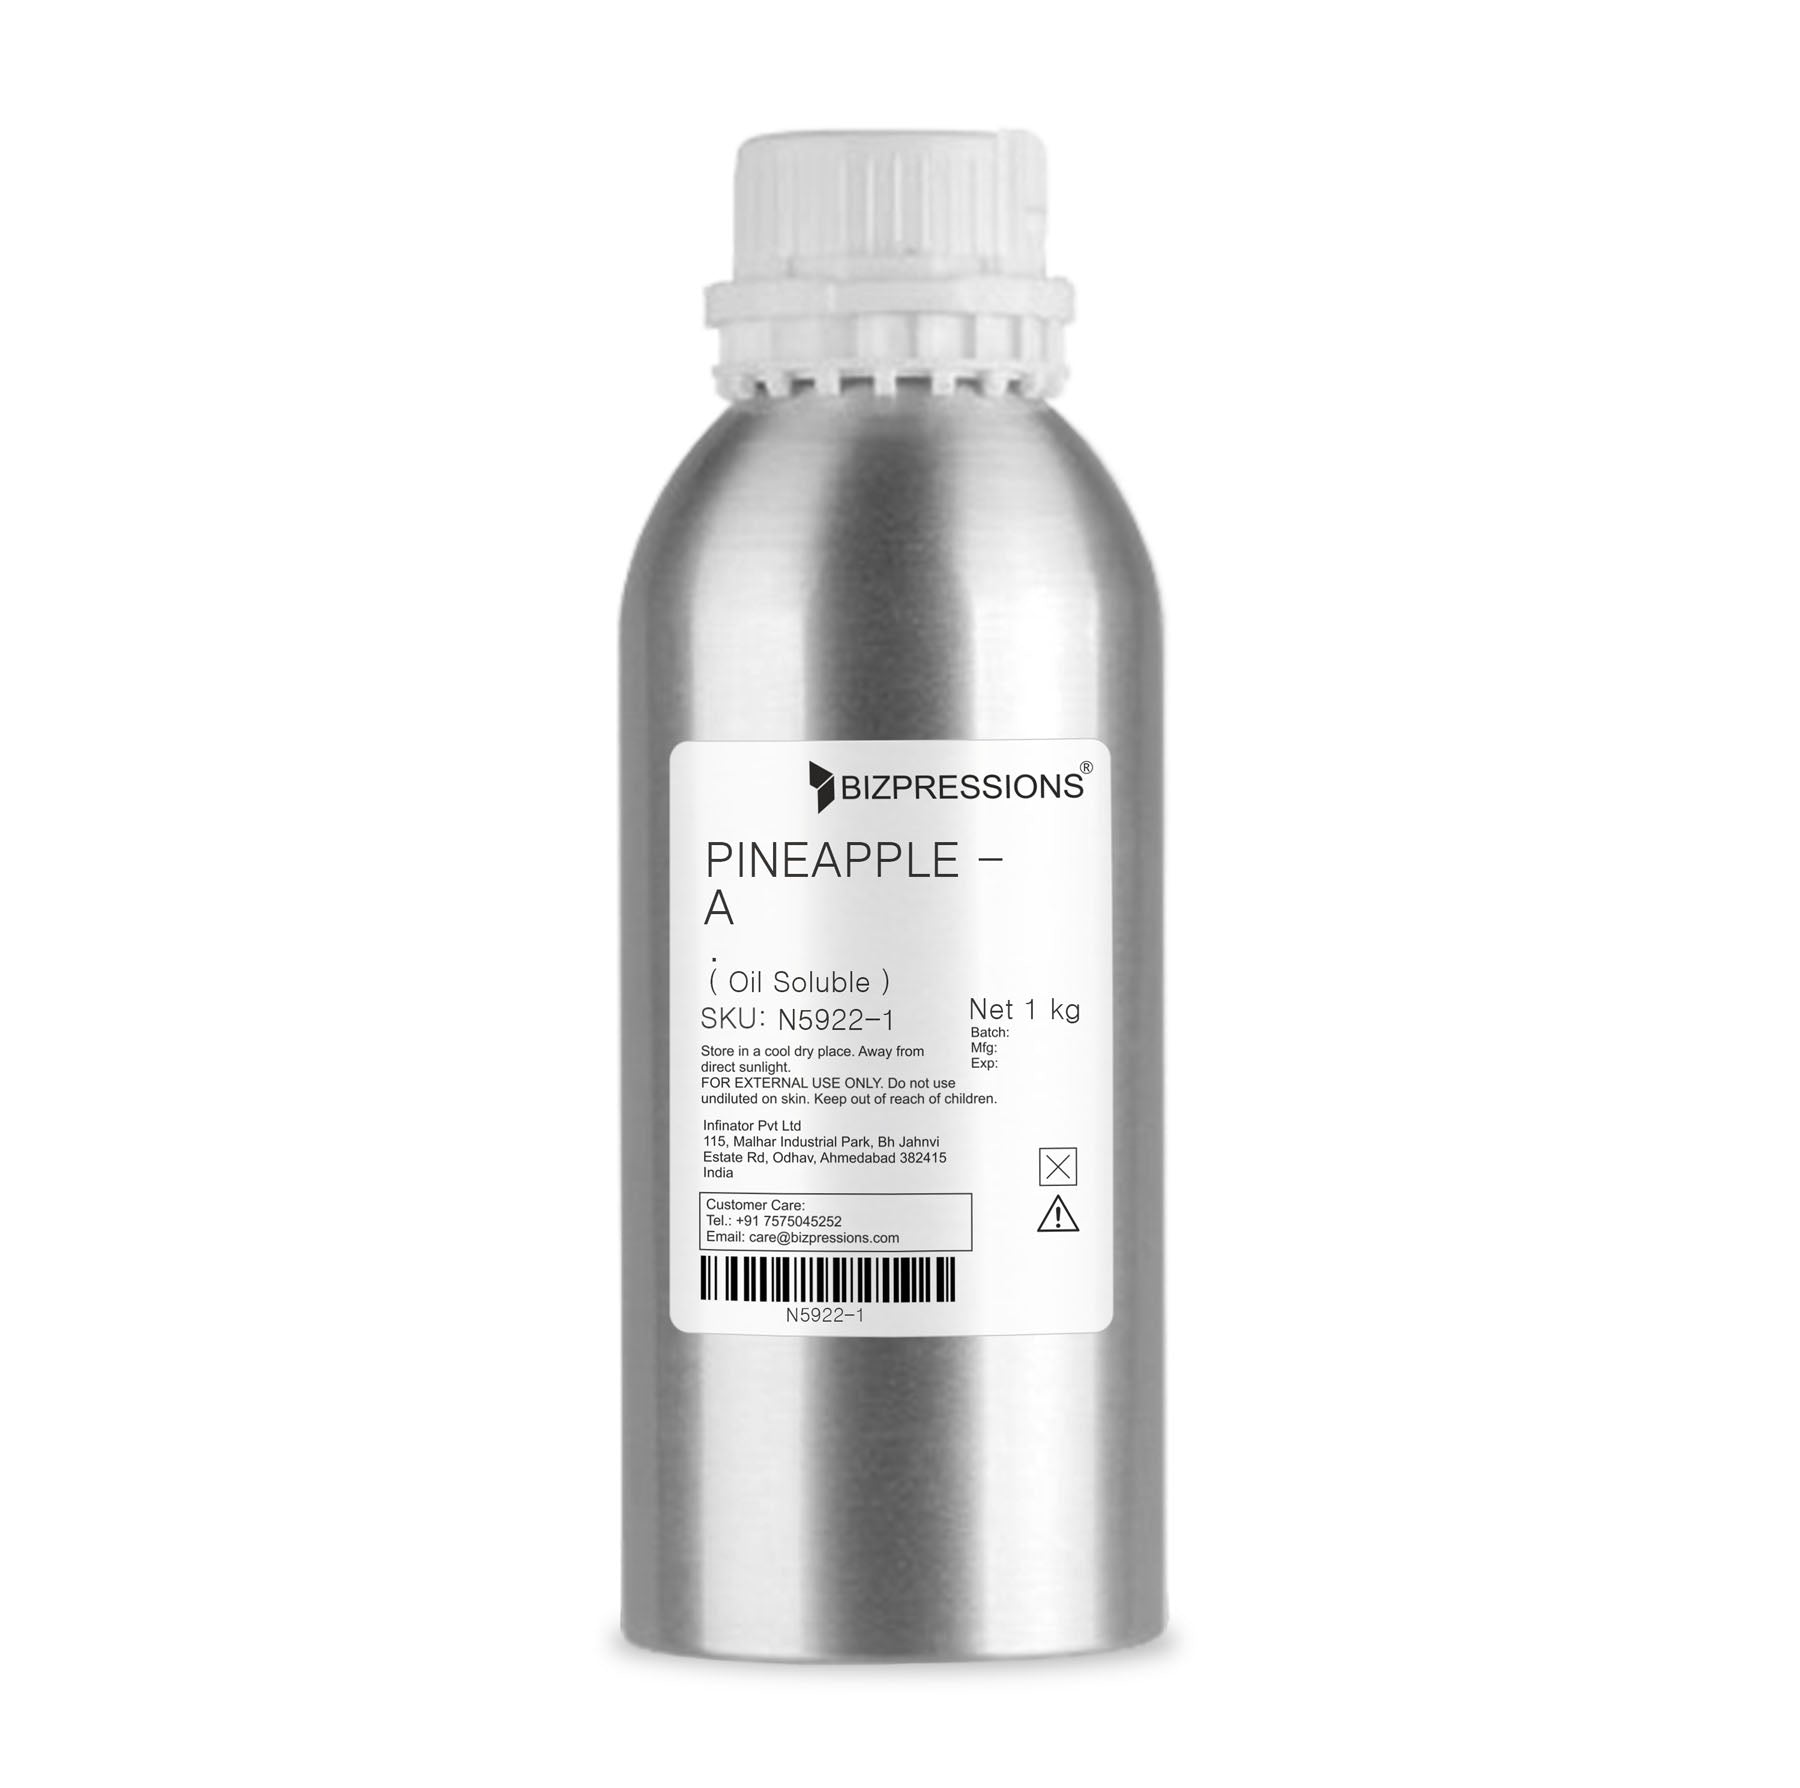 PINEAPPLE - A - Fragrance ( Oil Soluble ) - 1 kg